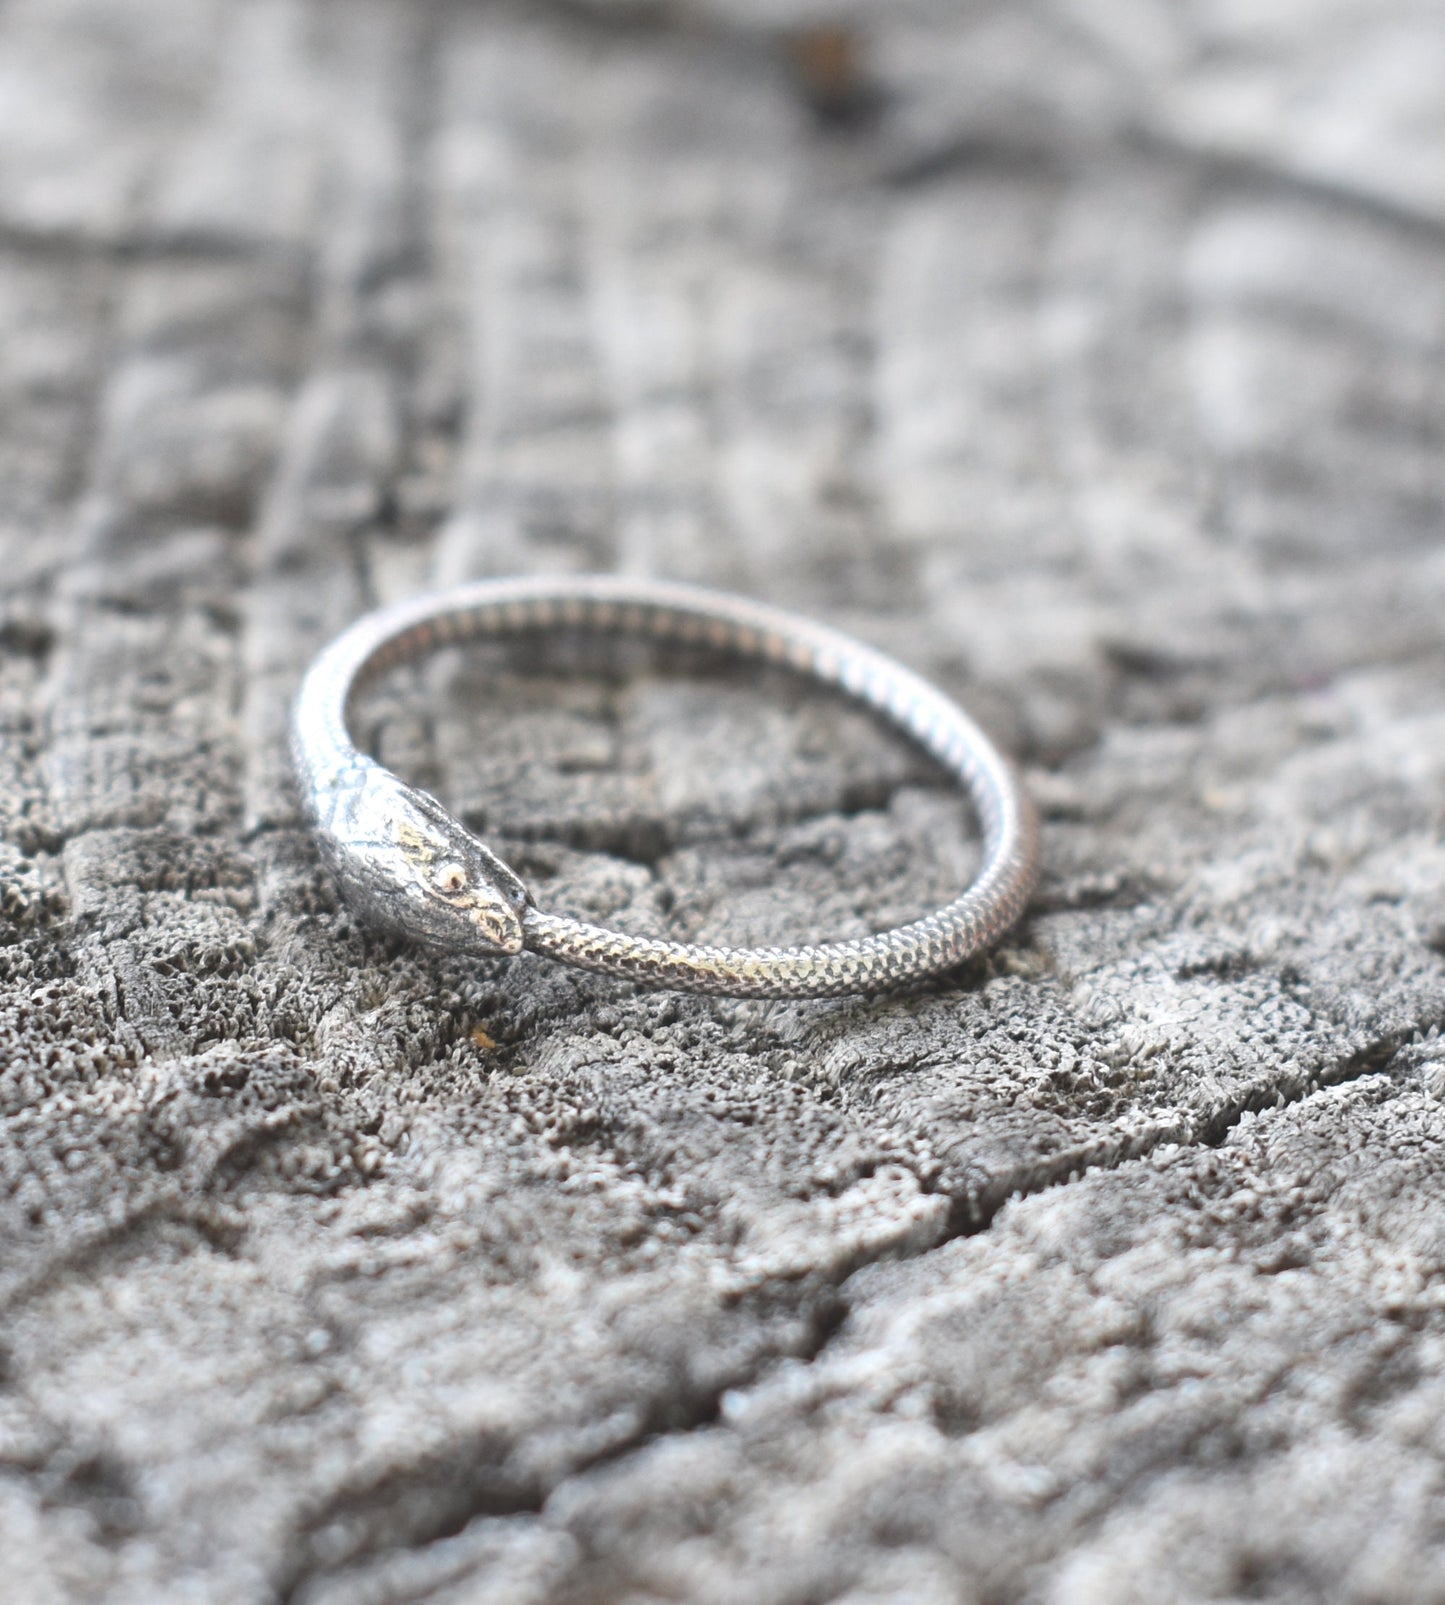 Ouroboros Ring- Snake Ring, Silver Snake Ring, Ouroboros Jewelry, Snake Jewelry-Aes Sedai